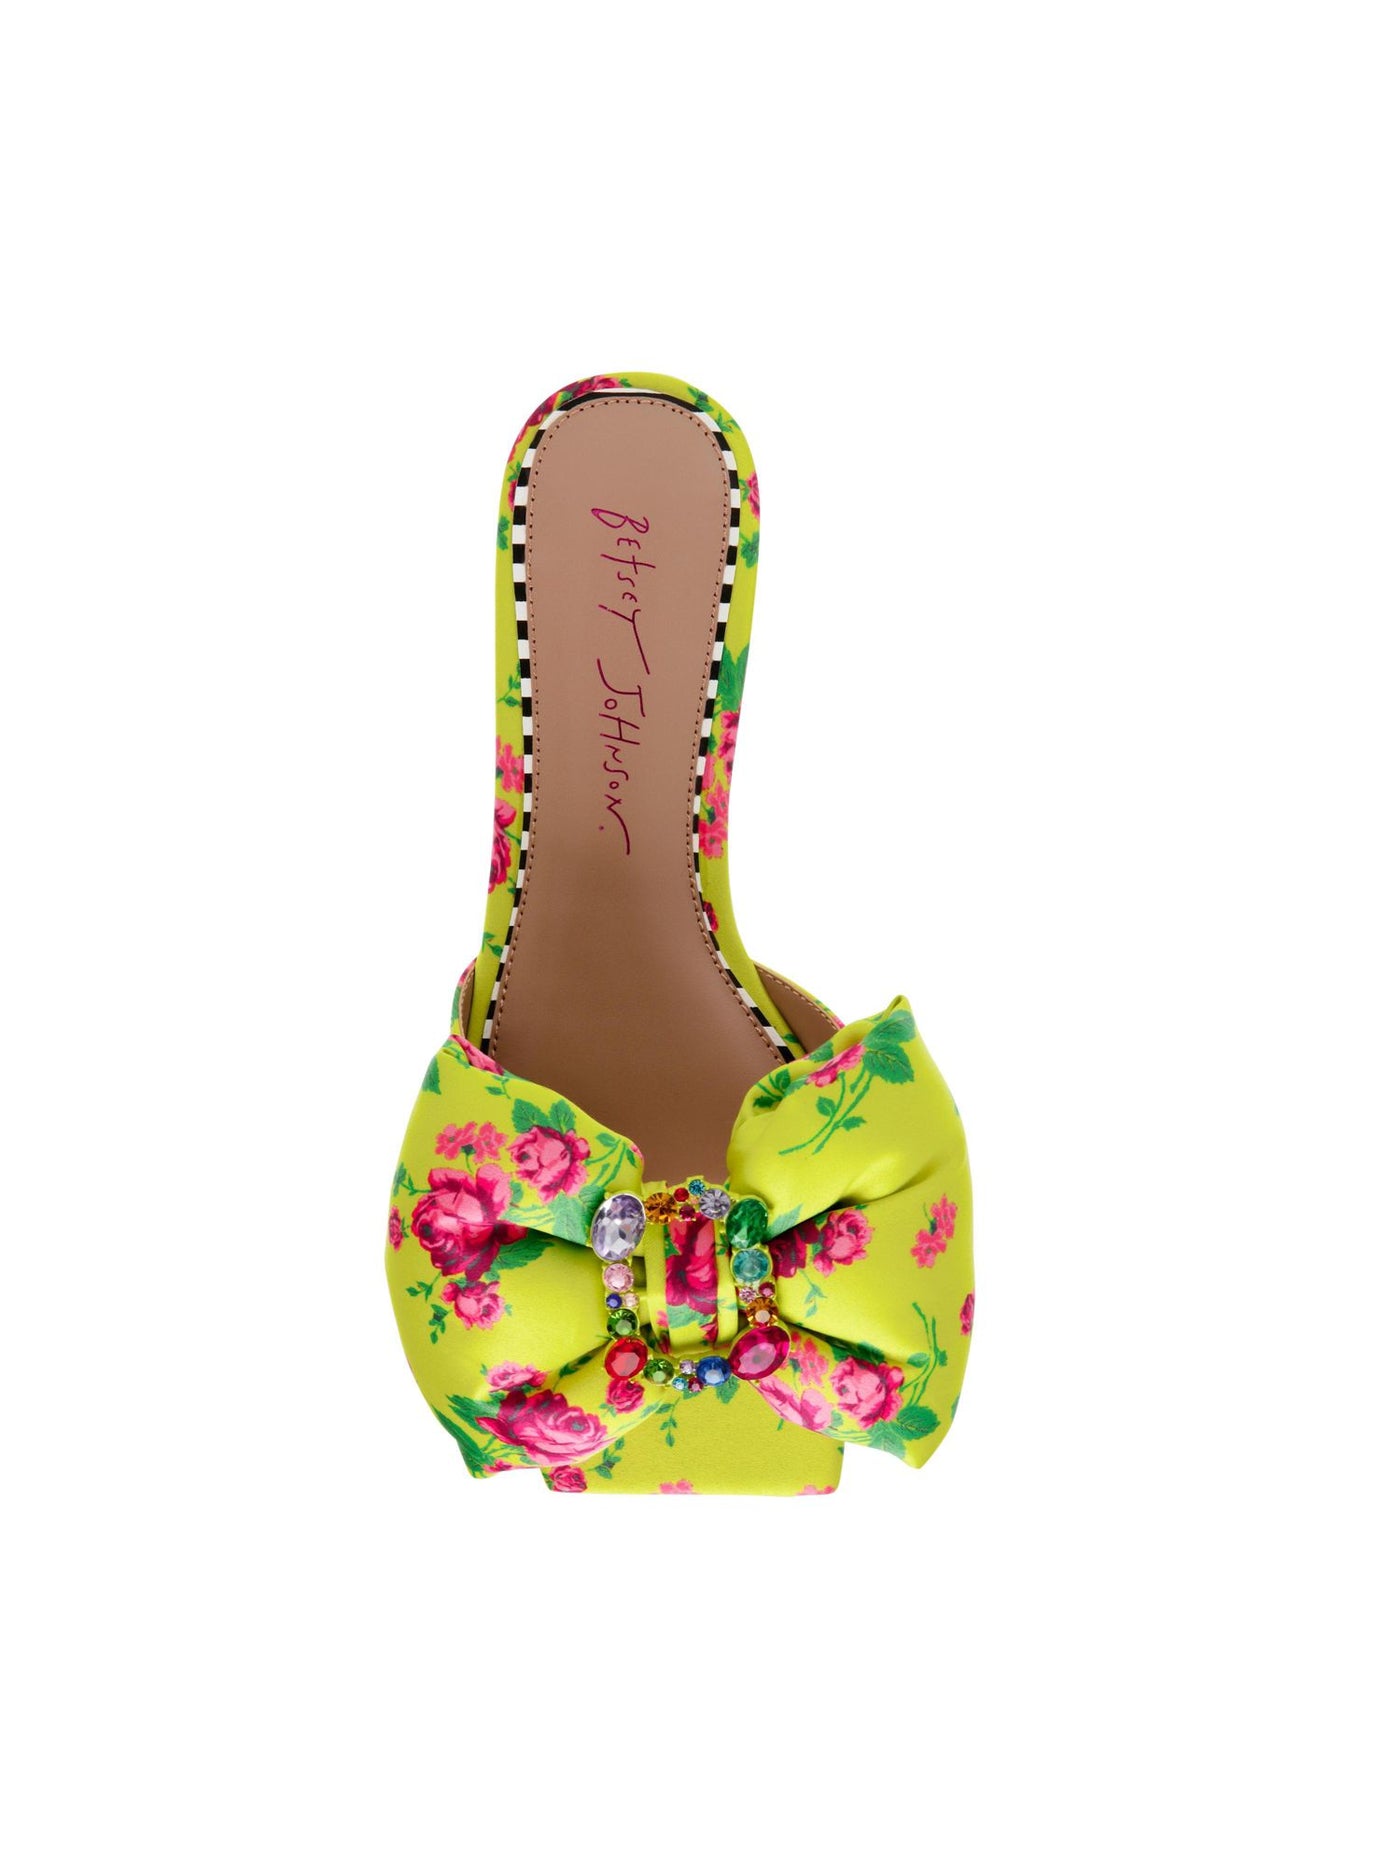 BETSEY JOHNSON Womens Green Mixed Media Bow Accent Padded Daisyy-g Square Toe Slip On Flats Shoes 5 M